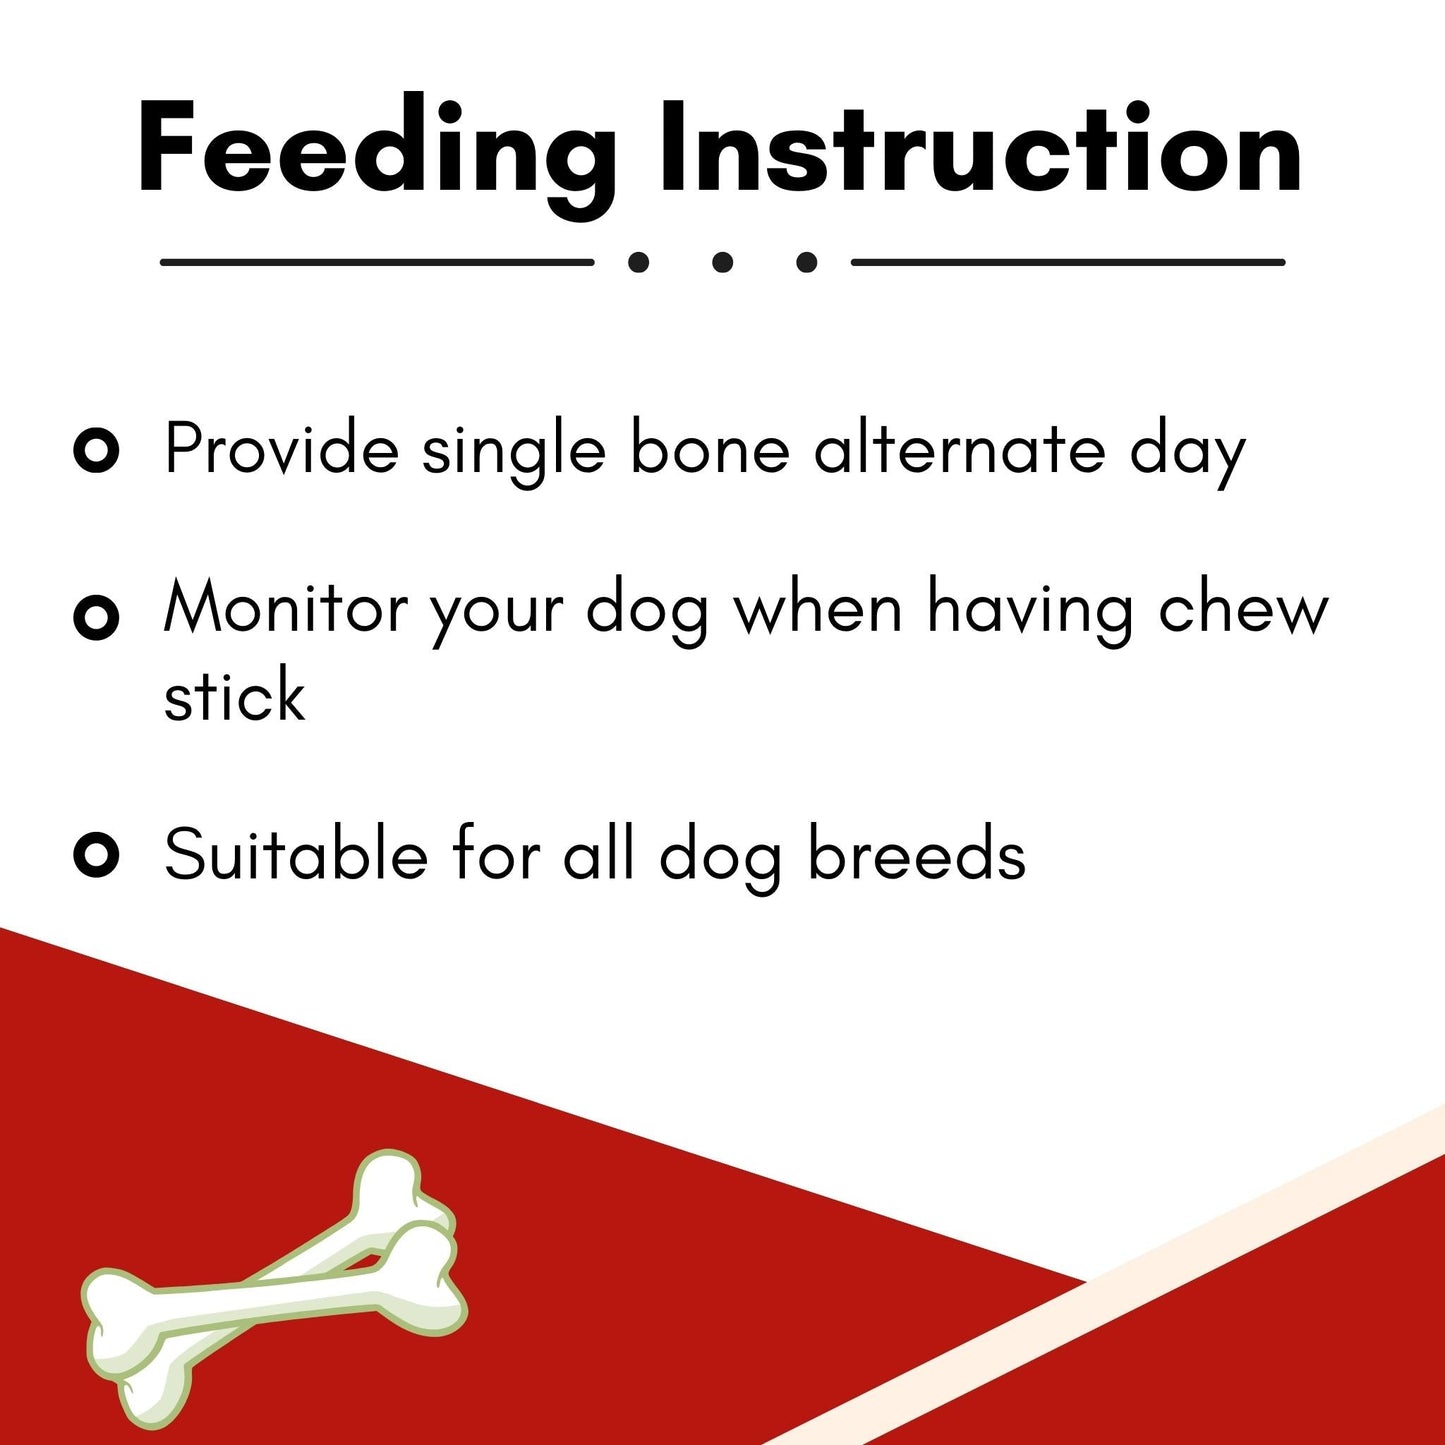 Foodie Puppies Chompsters Rawhide Bone for Dogs - 6inch Bone, 1Kg